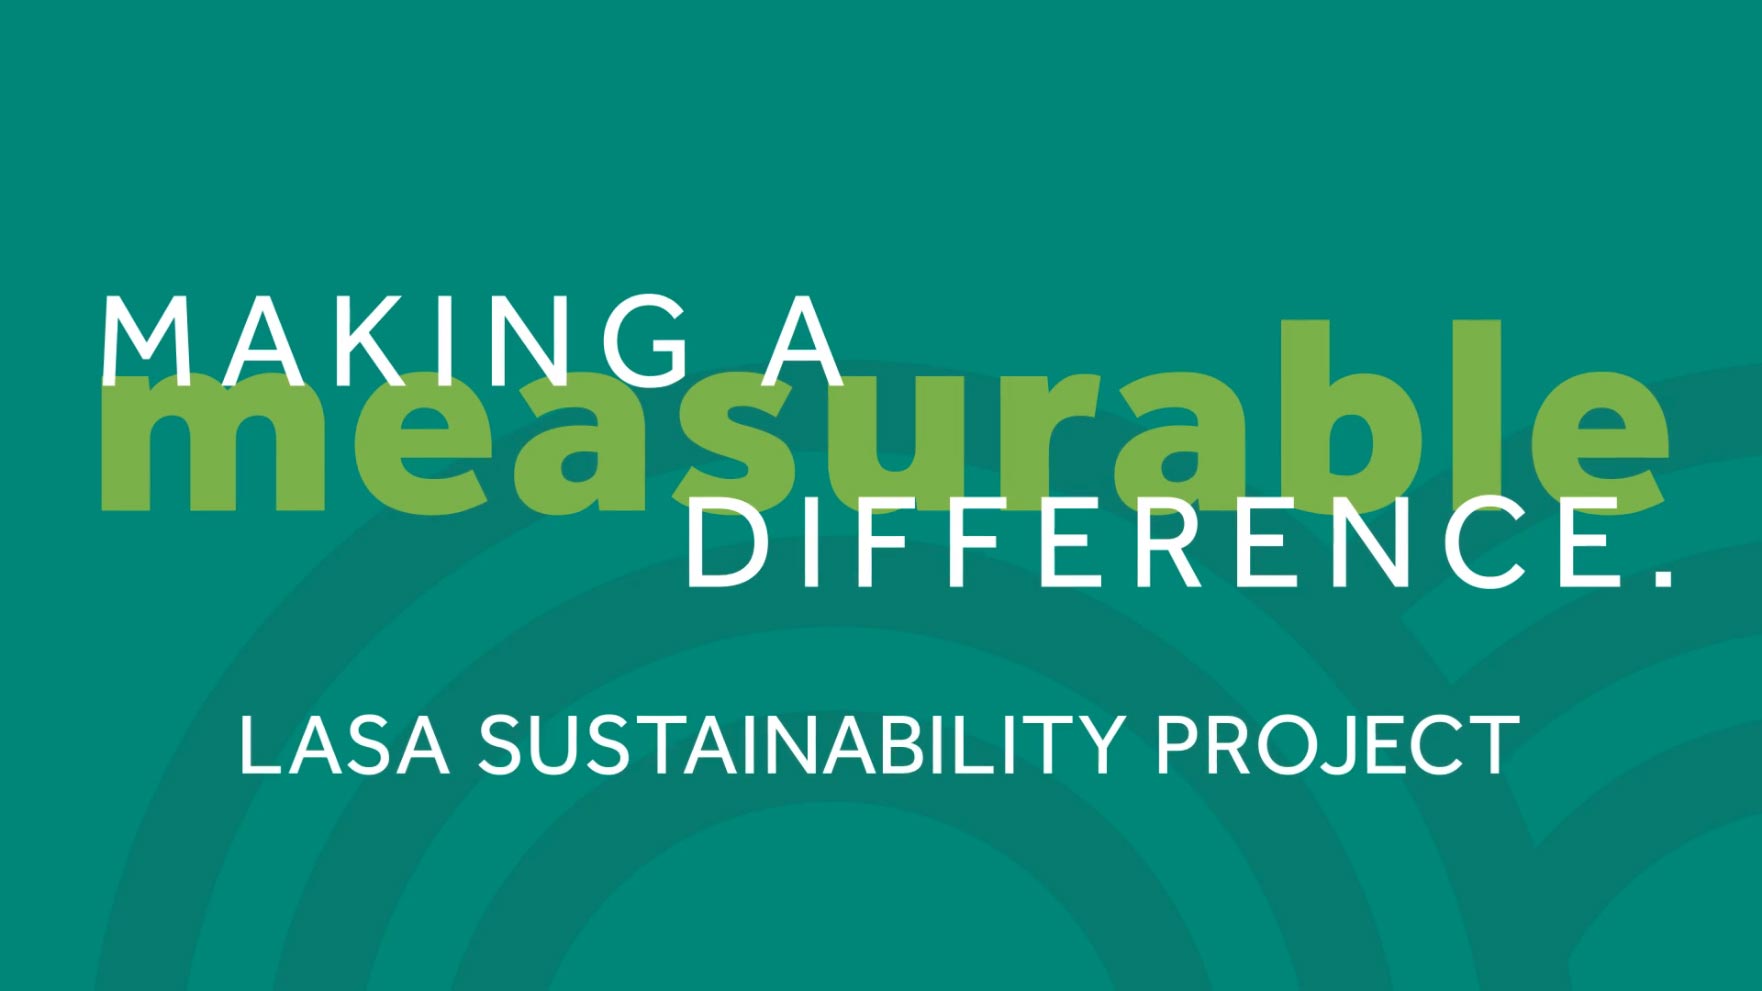 LASA Sustainability Project